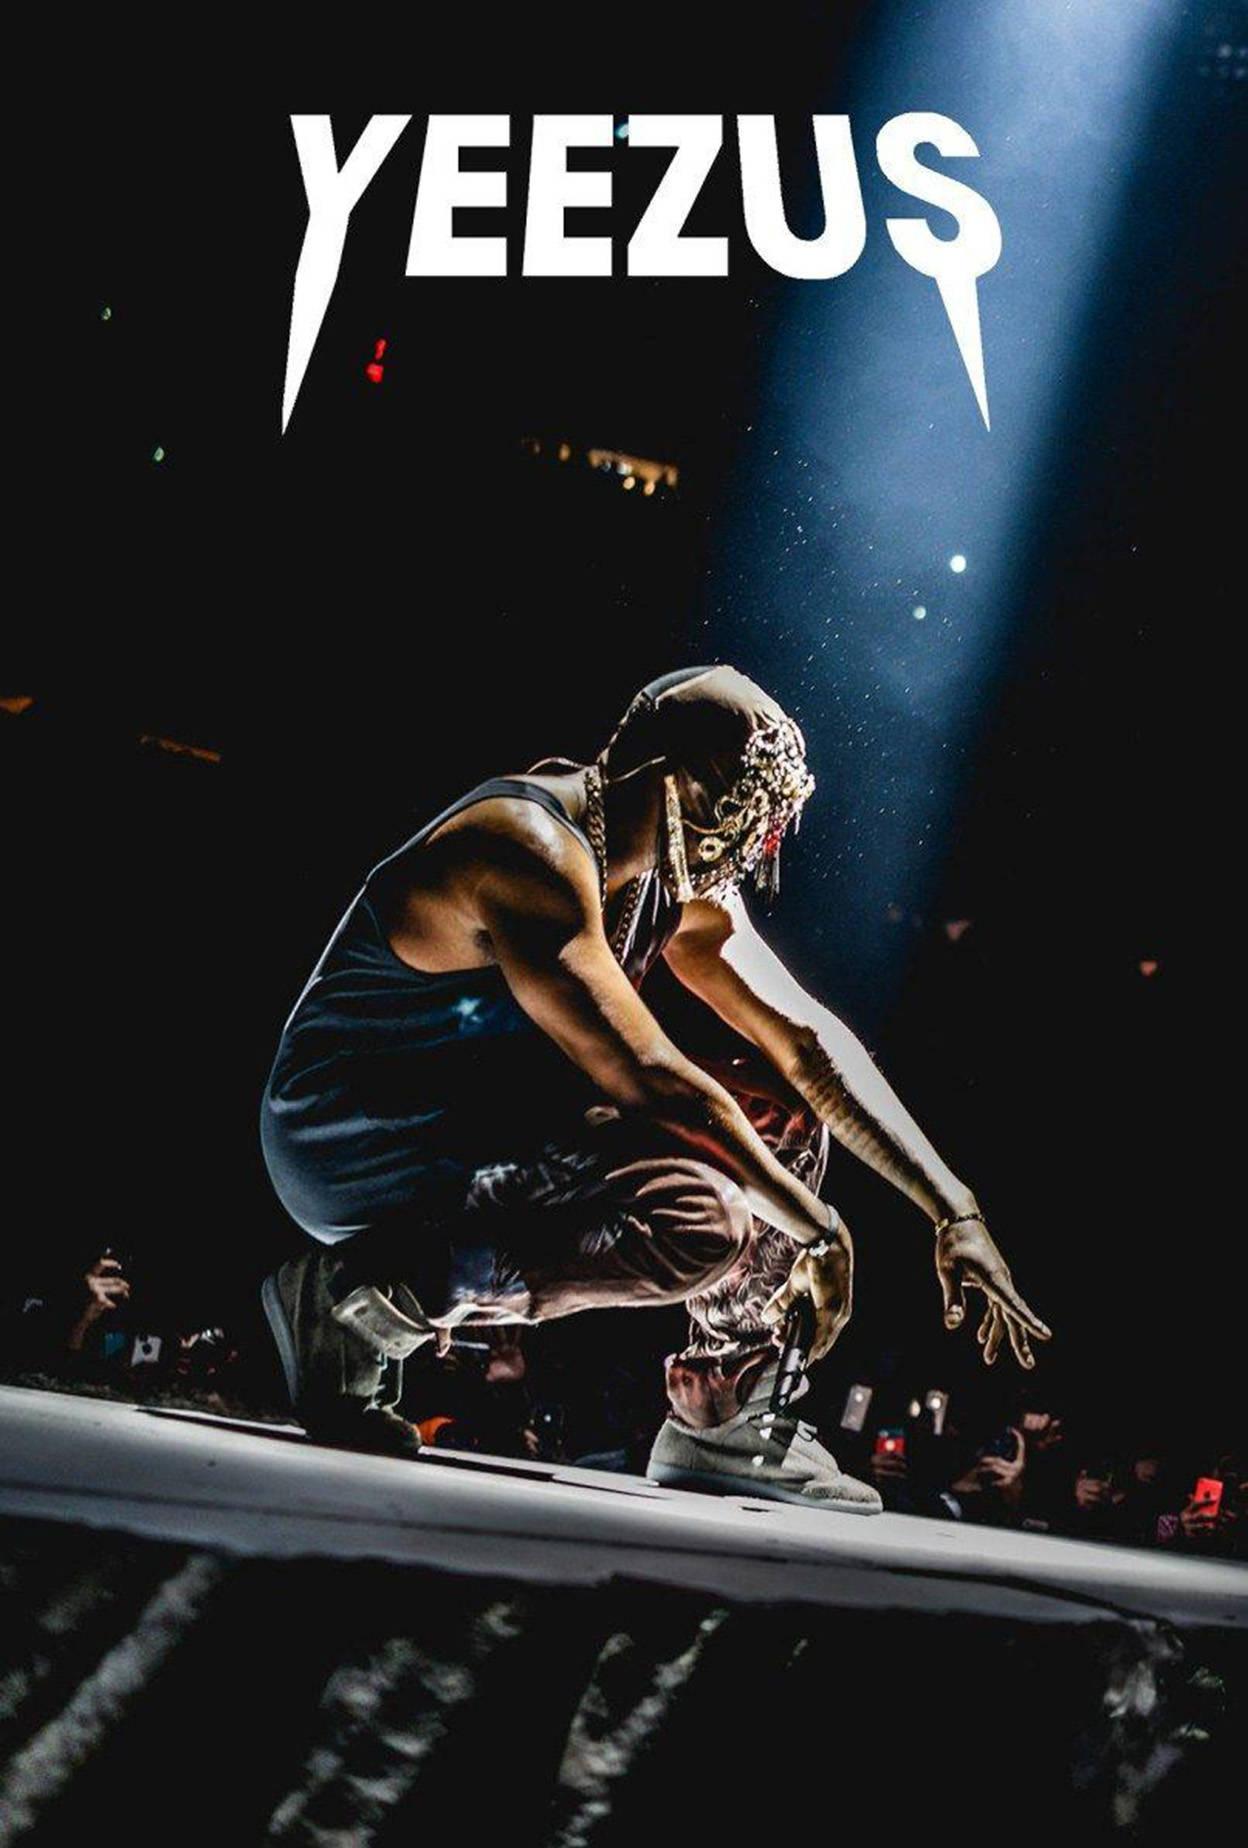 Download Kanye West Yeezus Dope Iphone Wallpaper